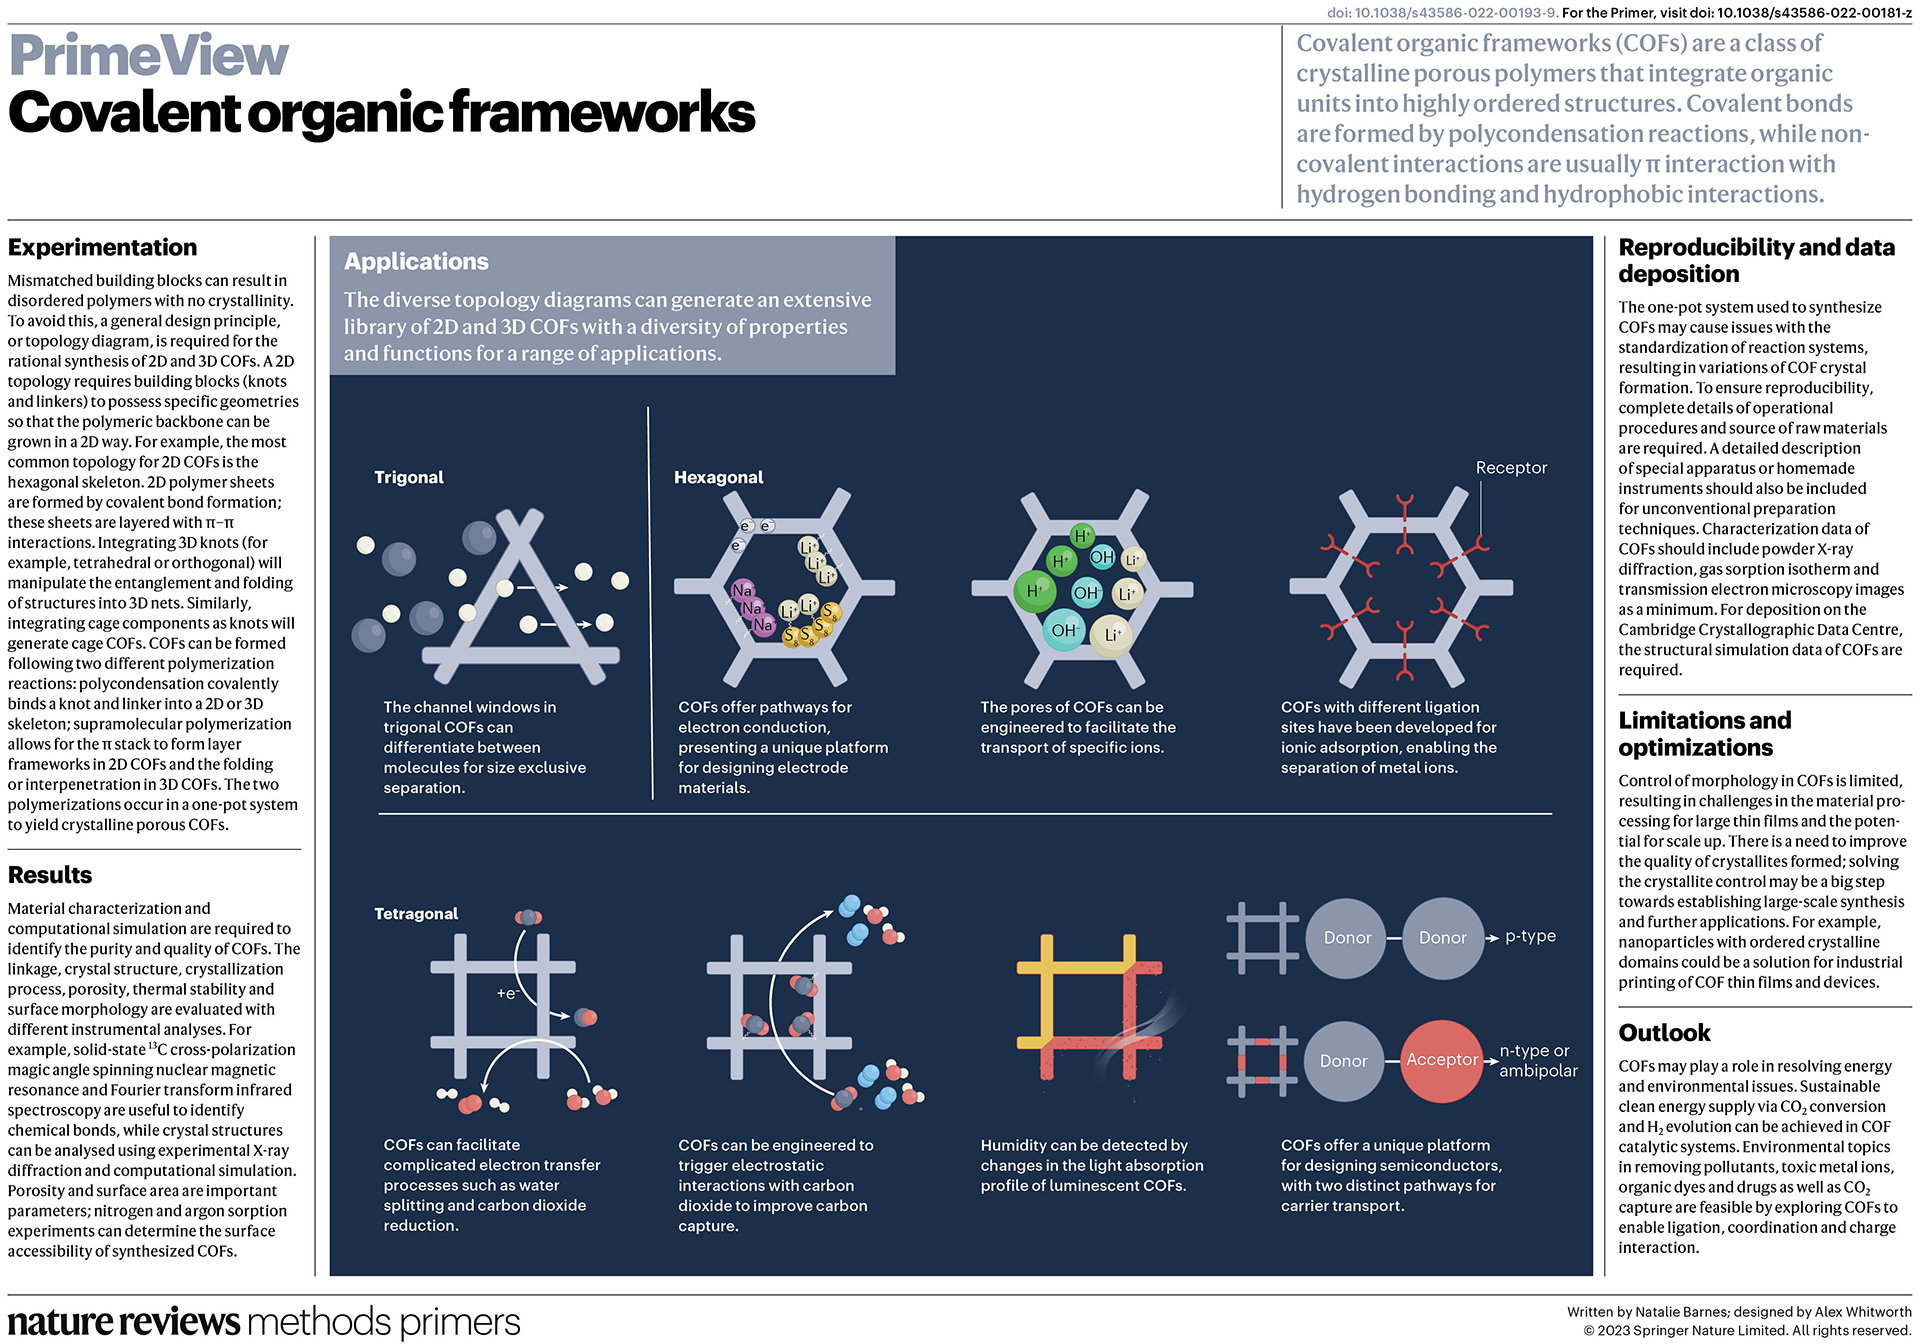 Covalent organic frameworks | Nature Reviews Methods Primers